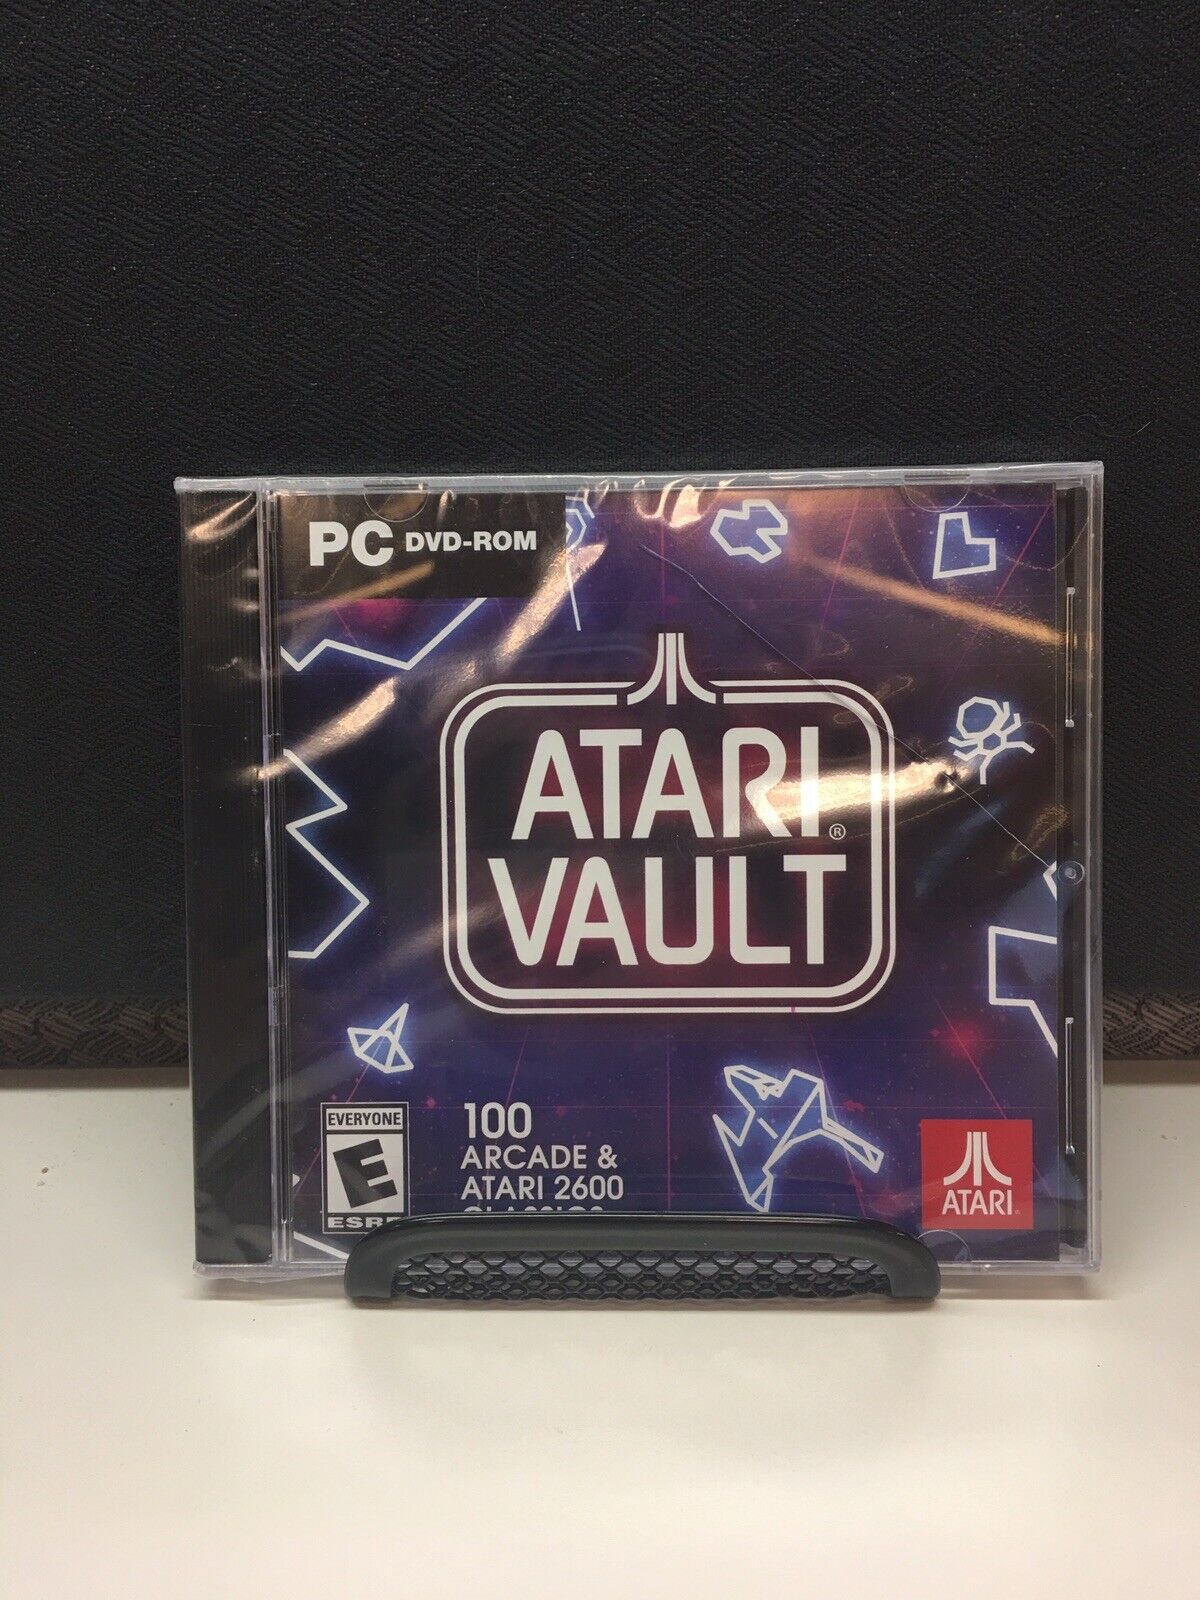 Atari Vault 100 Arcade And Atari 2600 Classics Computer PC DVD-ROM Game, New